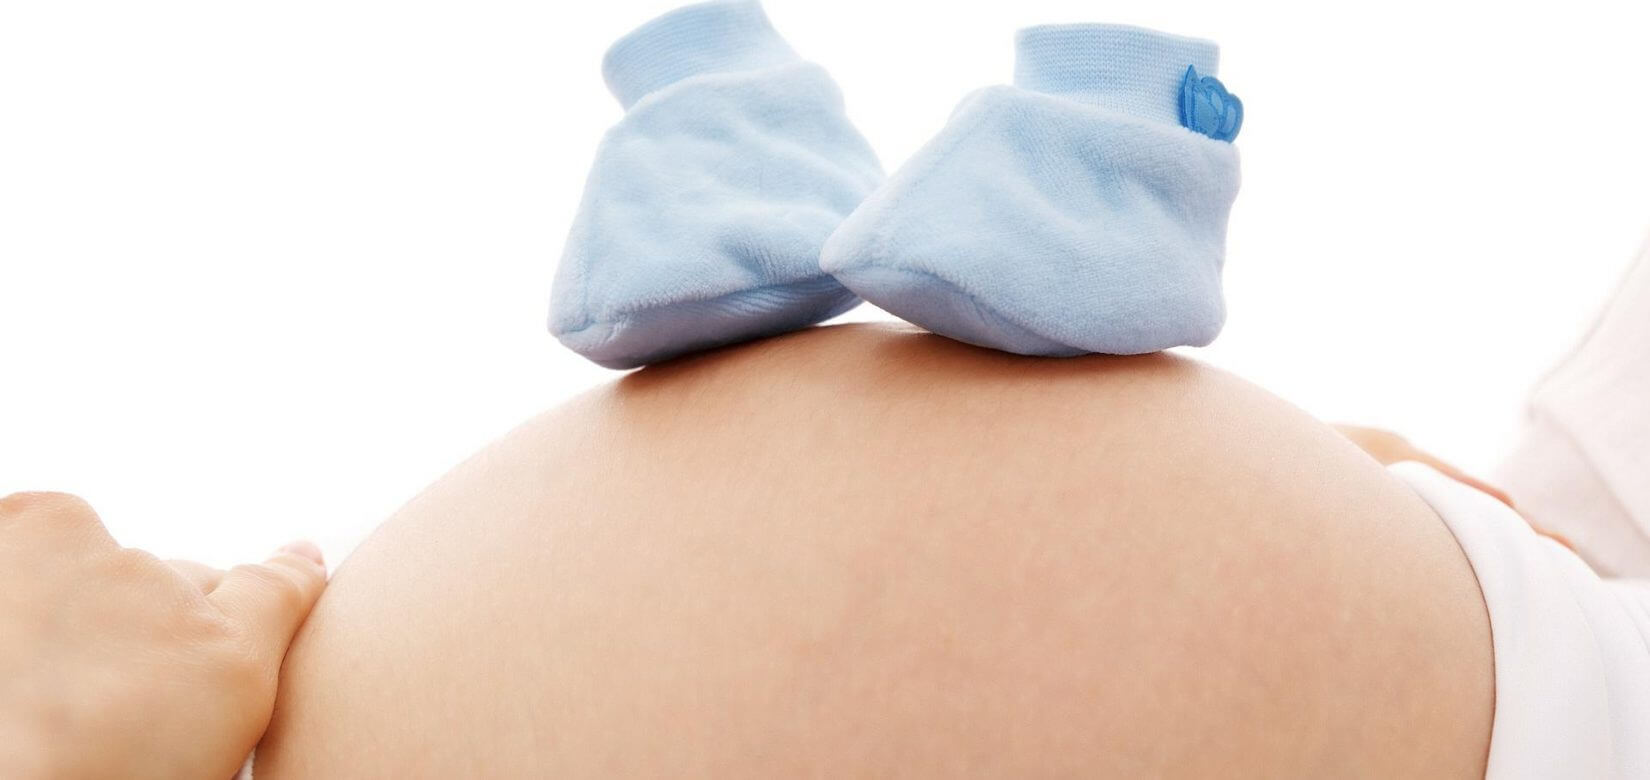 Eπίδομα γέννας: Τι θα ισχύσει από 1 Ιανουαρίου 2020